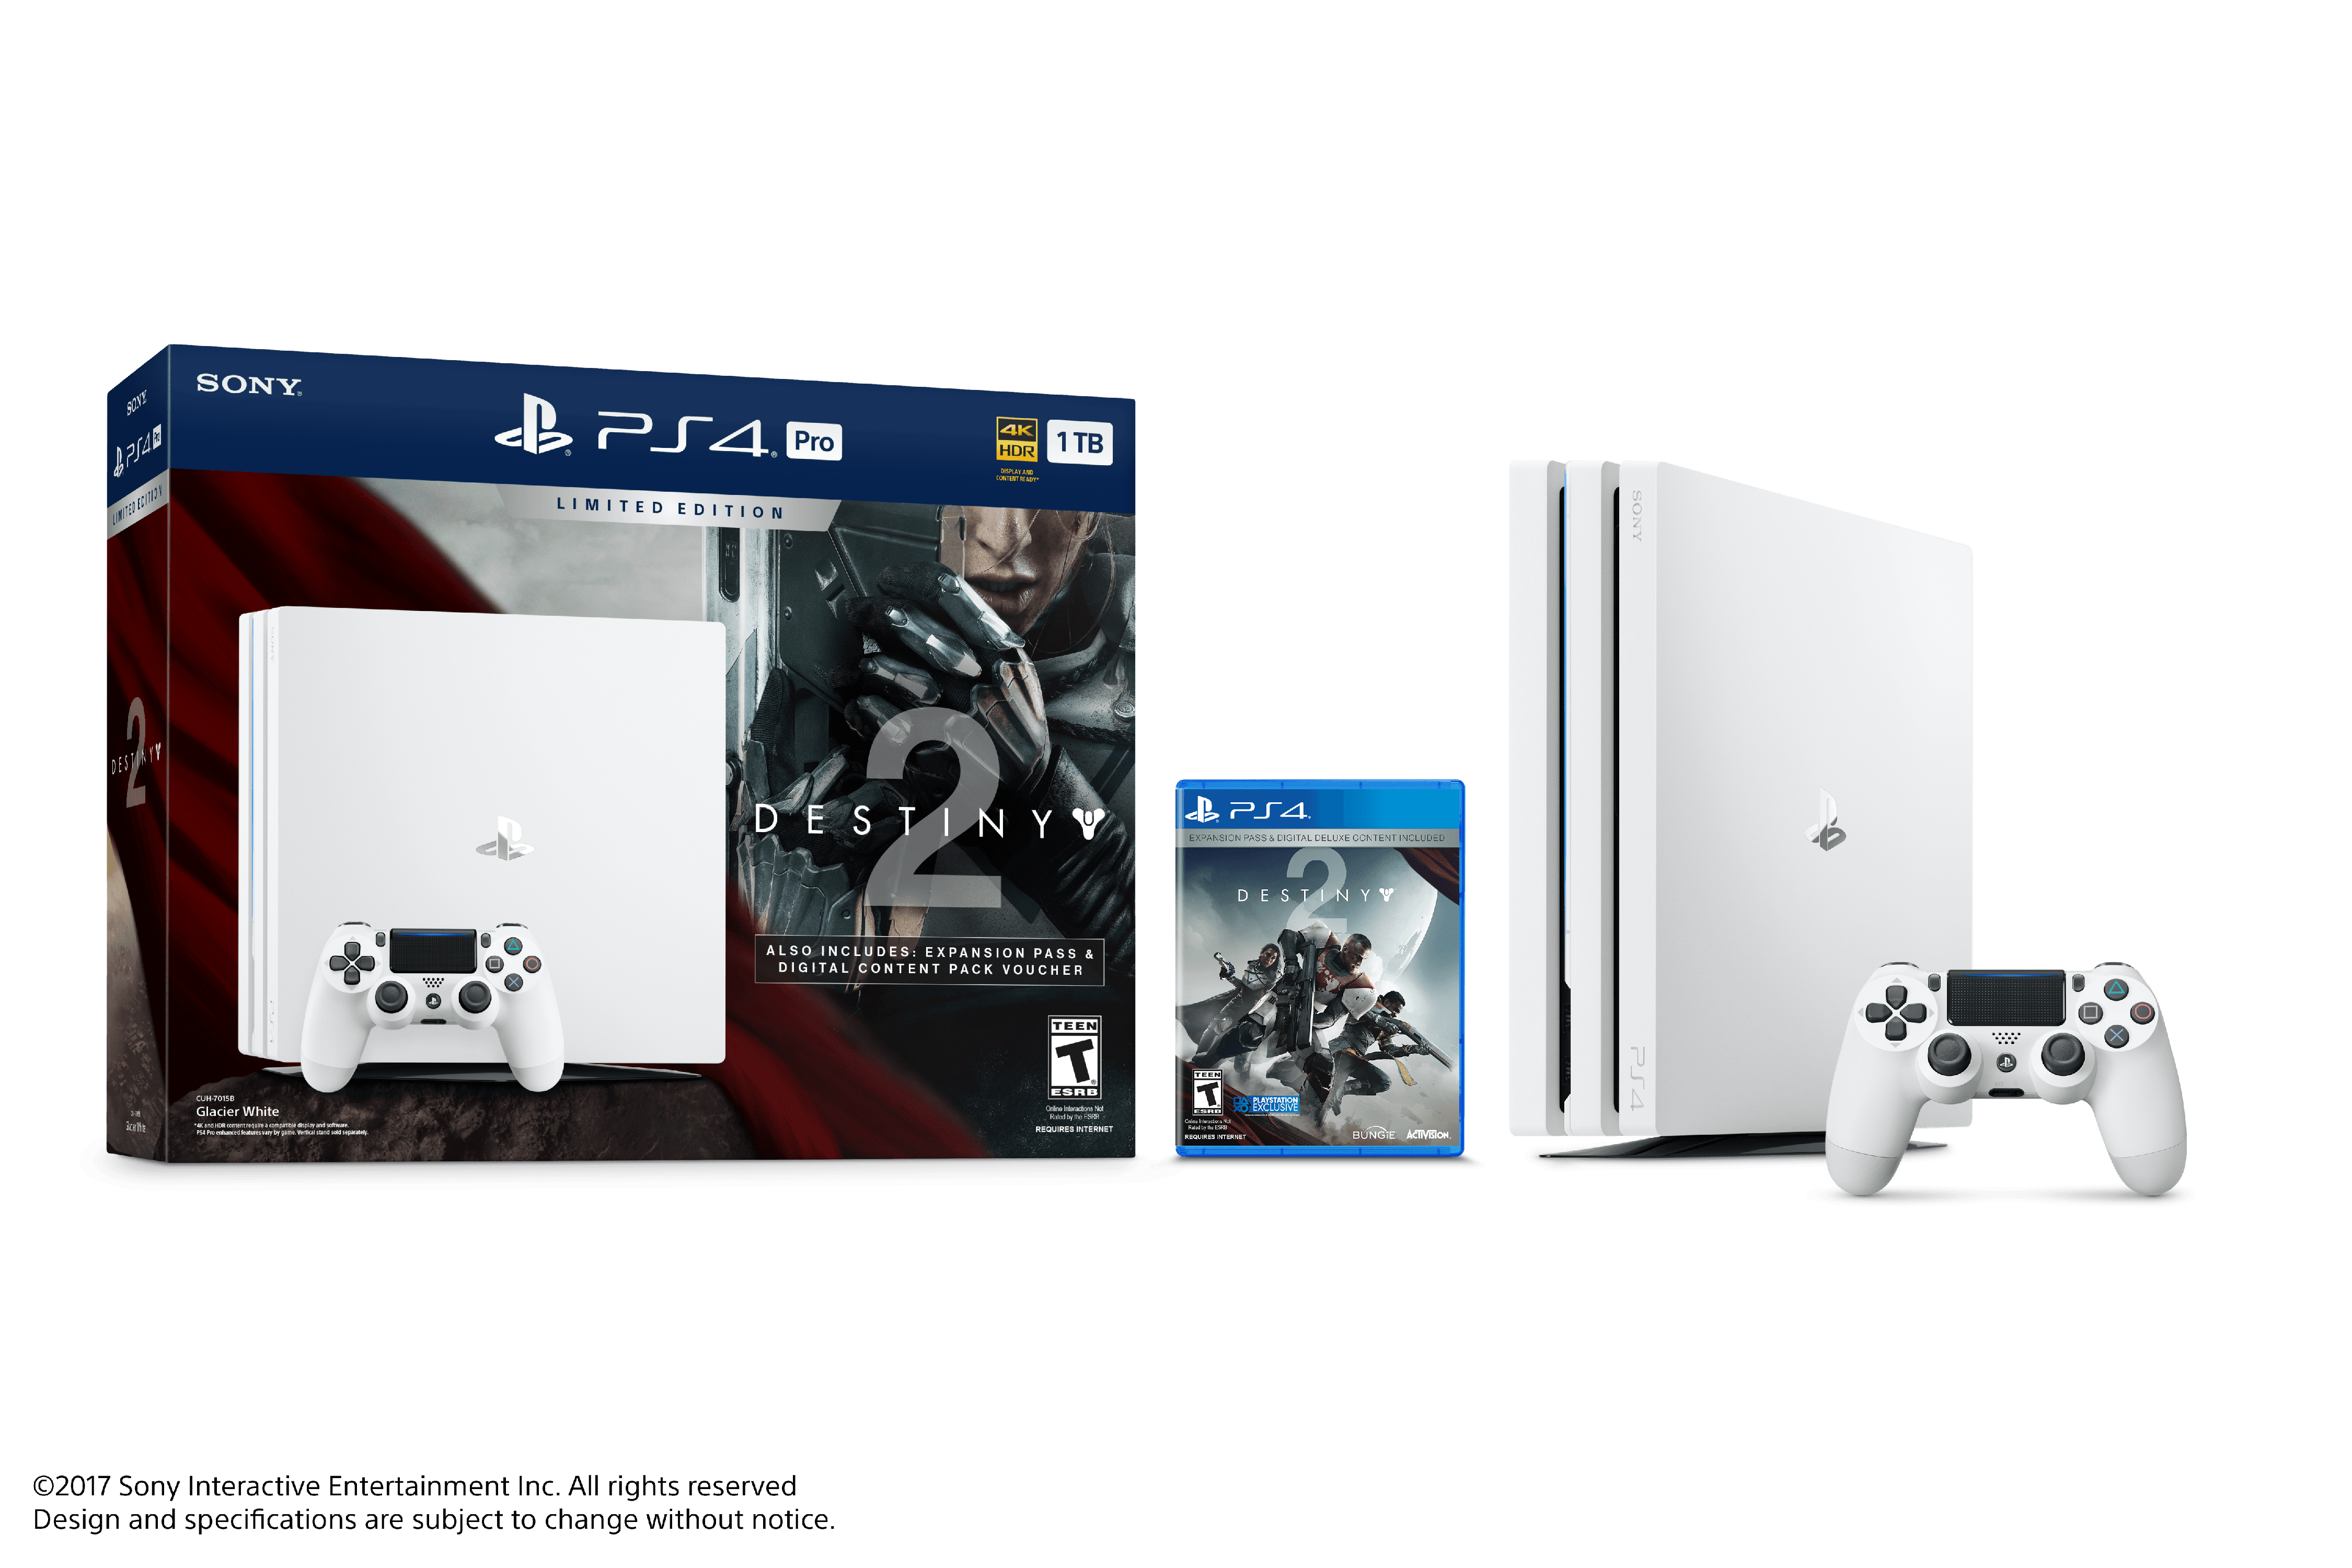 auction Accusation Ventilate Sony PlayStation 4 Pro 1TB Limited Edition Destiny 2 Bundle, White, 3002210  - Walmart.com